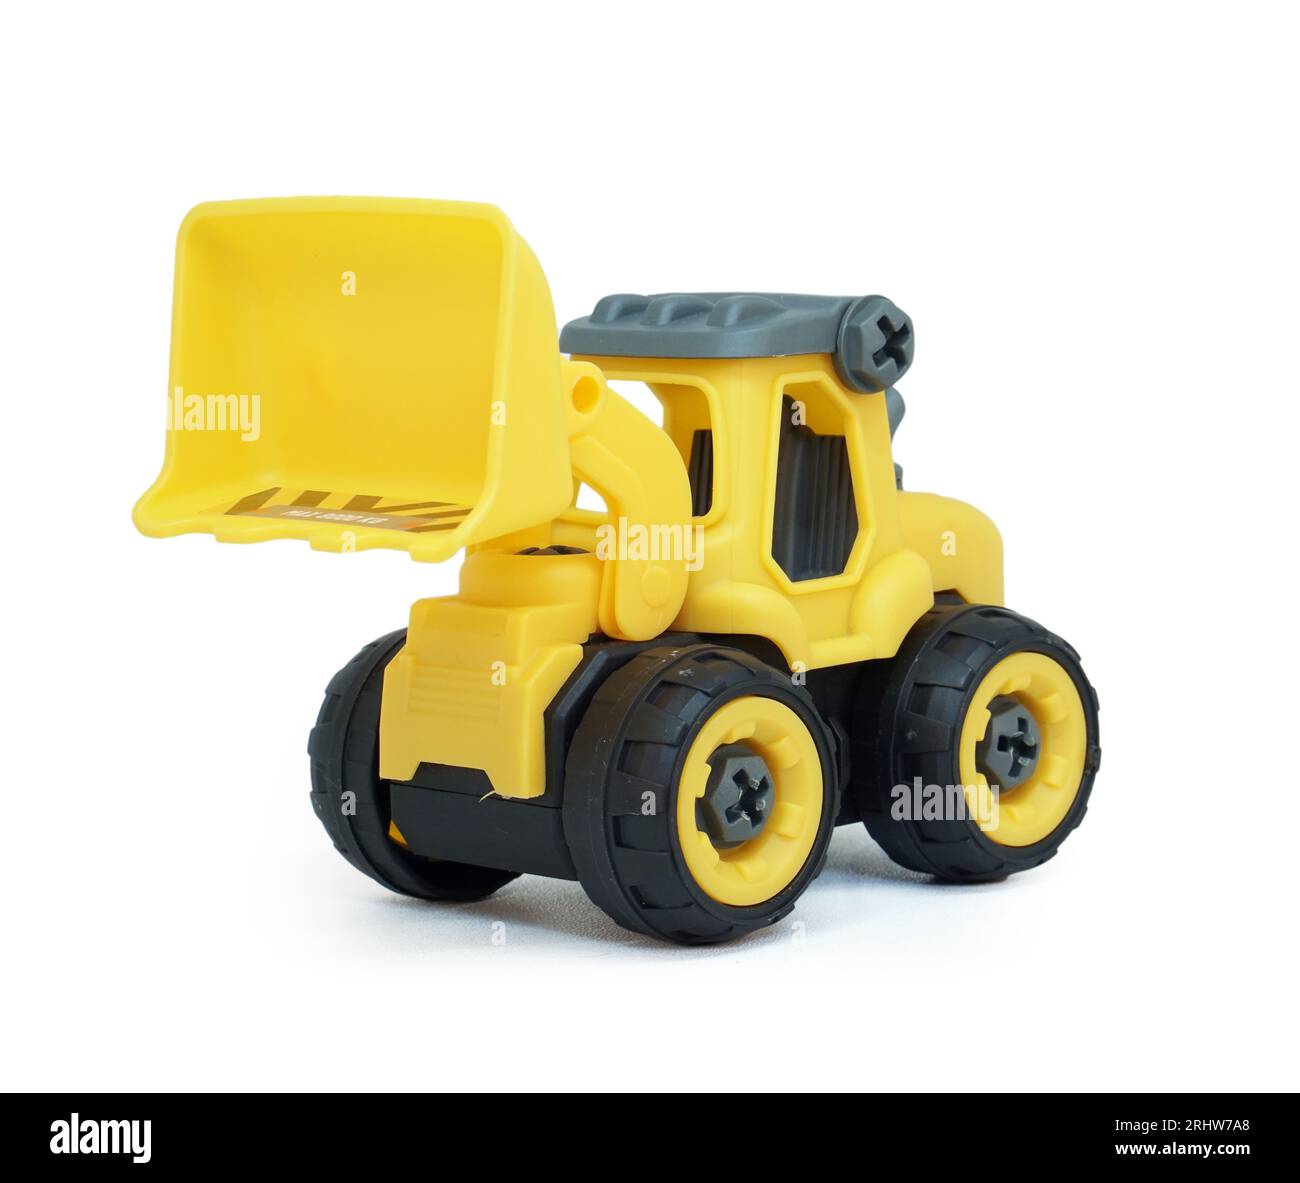 yellow plastic bulldozer toy isolated on white background. heavy construction vehicle toy. Stock Photo